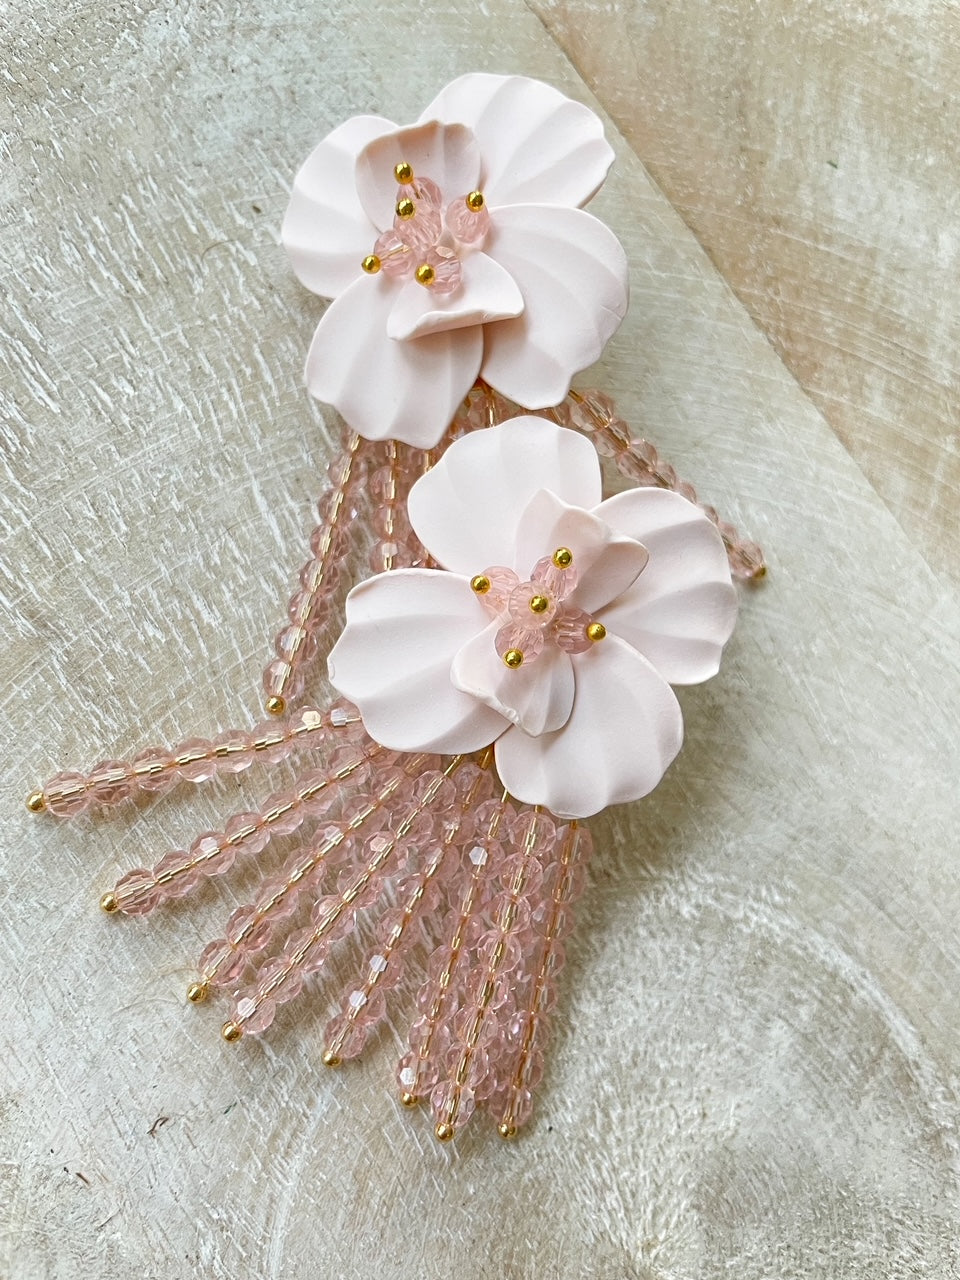 Juliet Floral Earrings in Pink